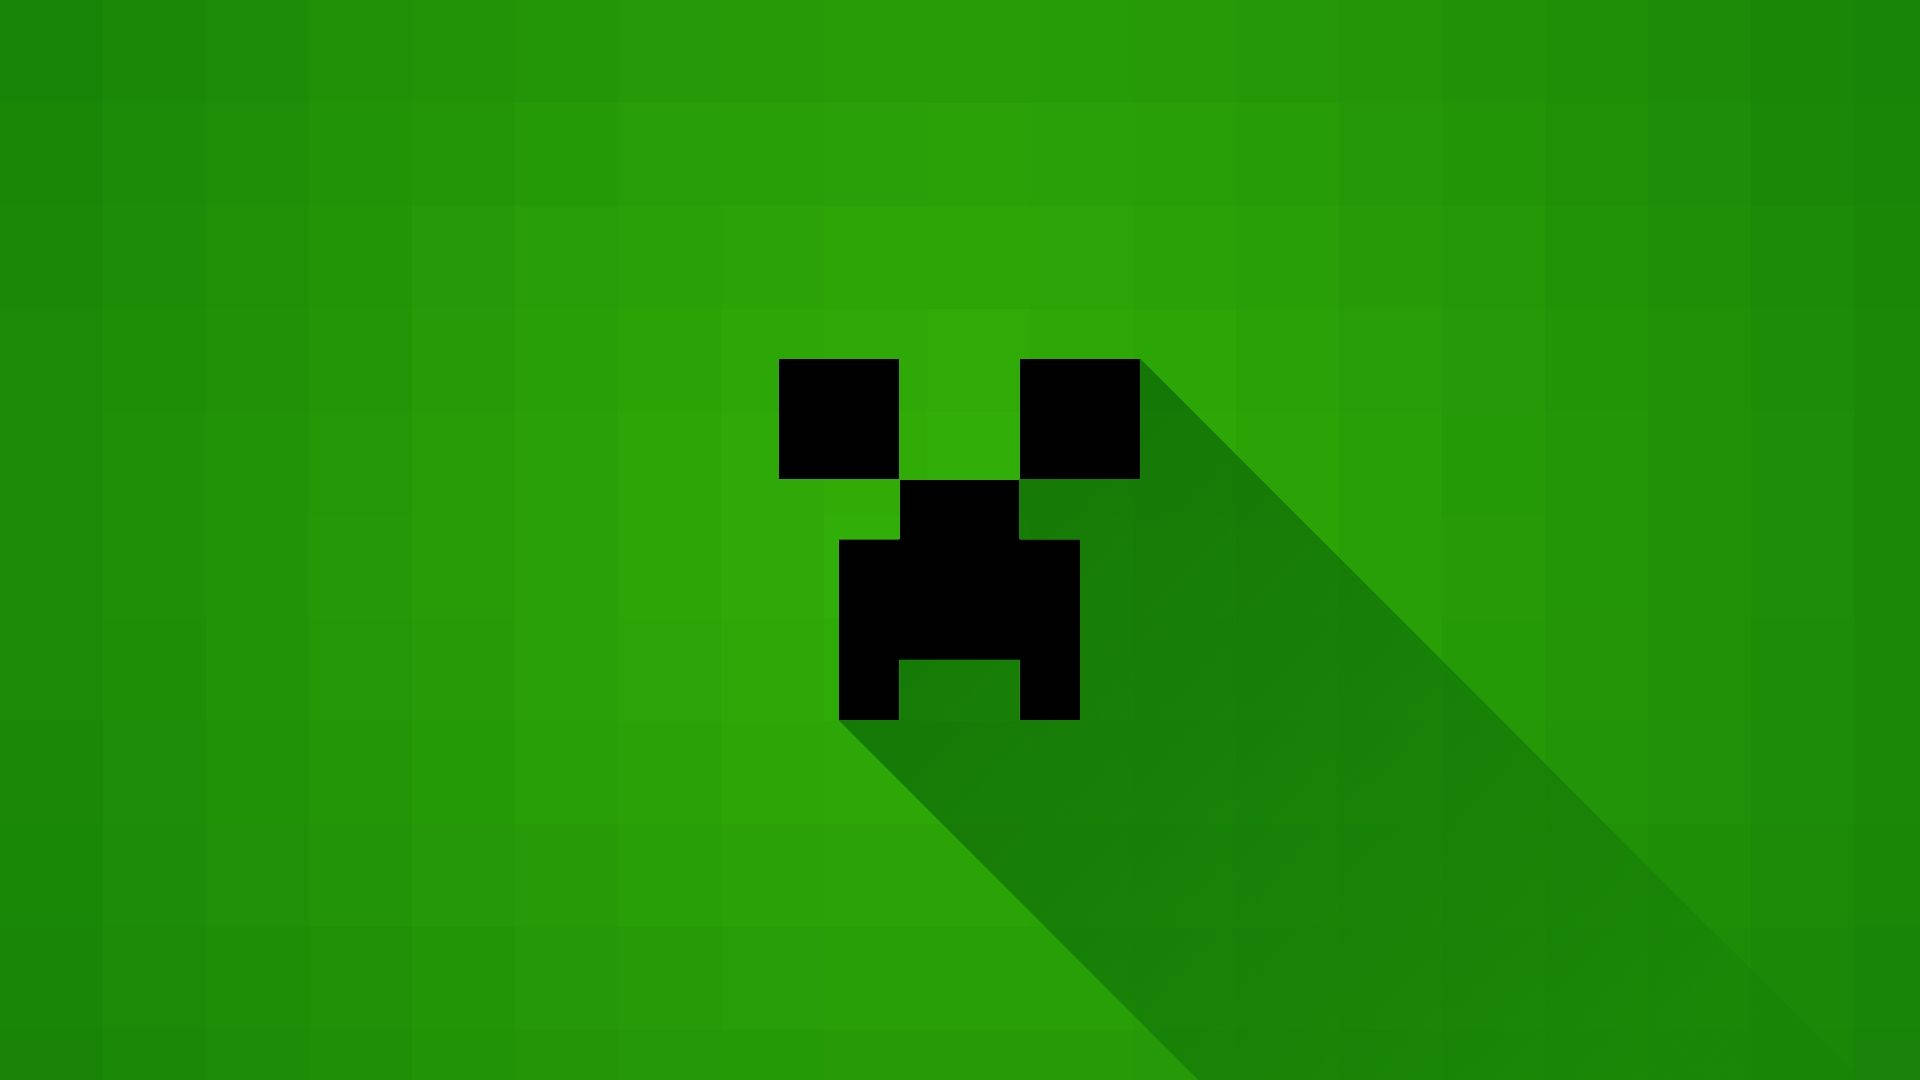 Top 999+ Minecraft Creeper Wallpaper Full HD, 4K✅Free to Use